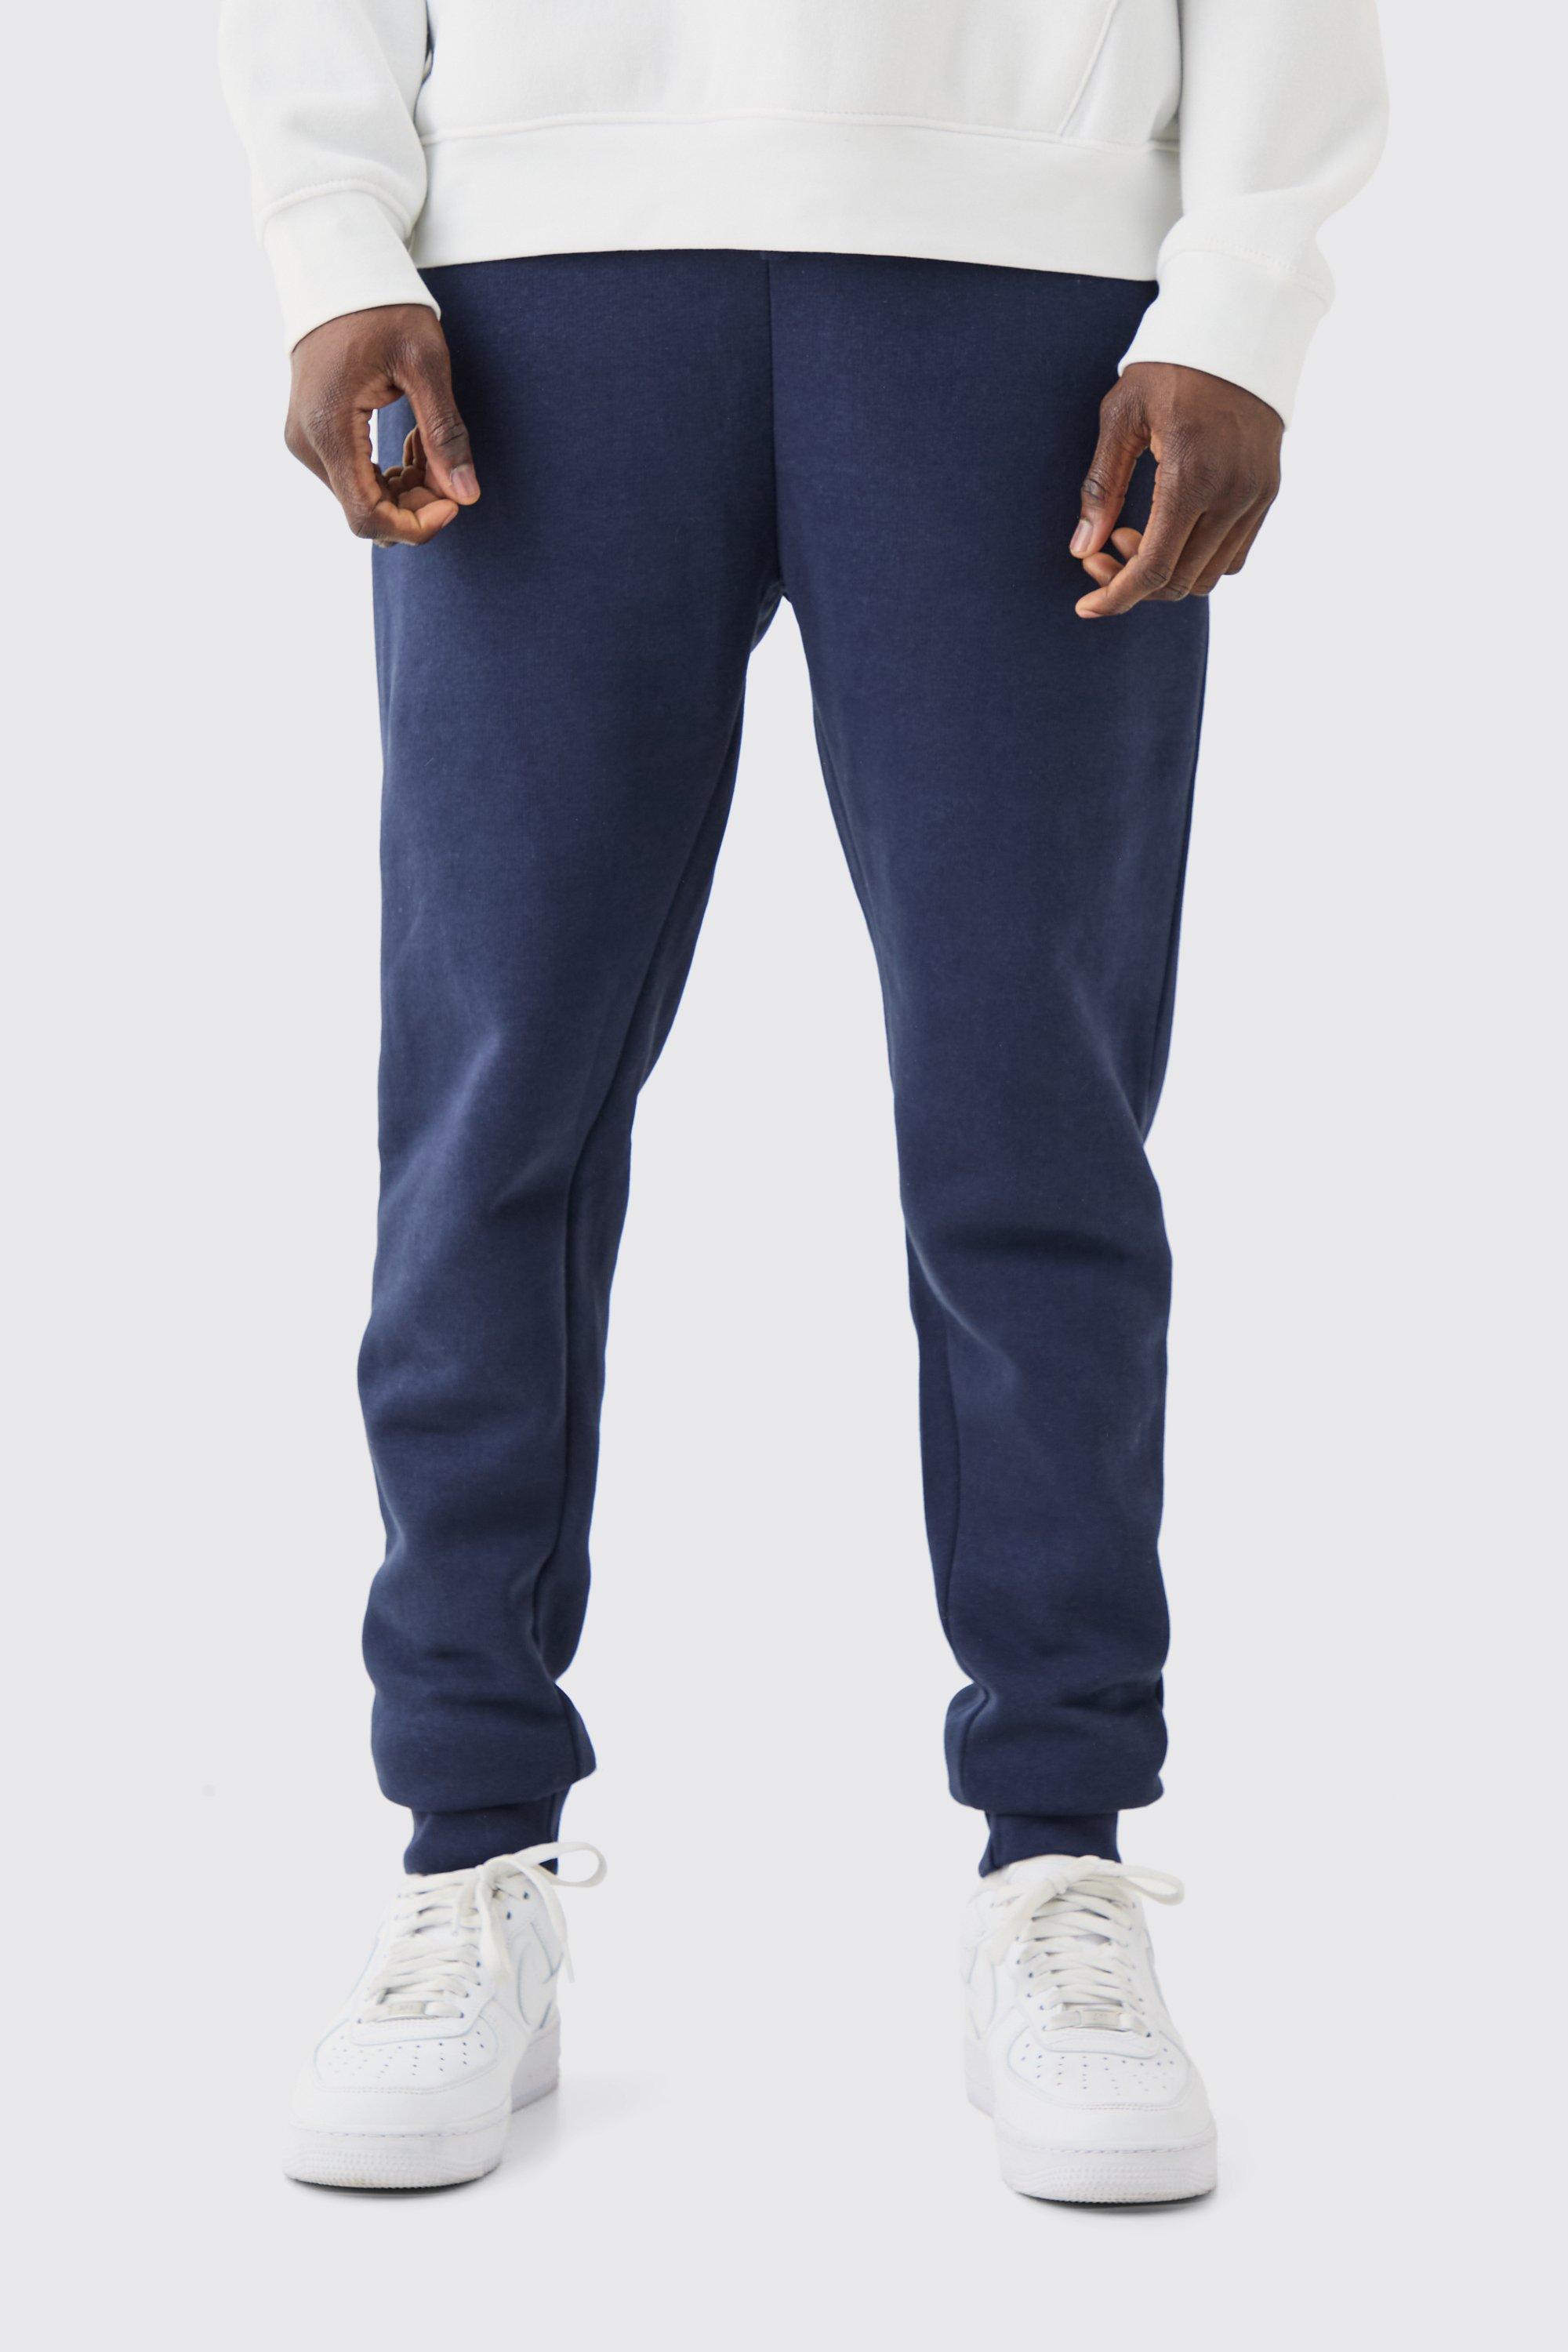 Image of Pantaloni tuta Basic Skinny Fit, Navy